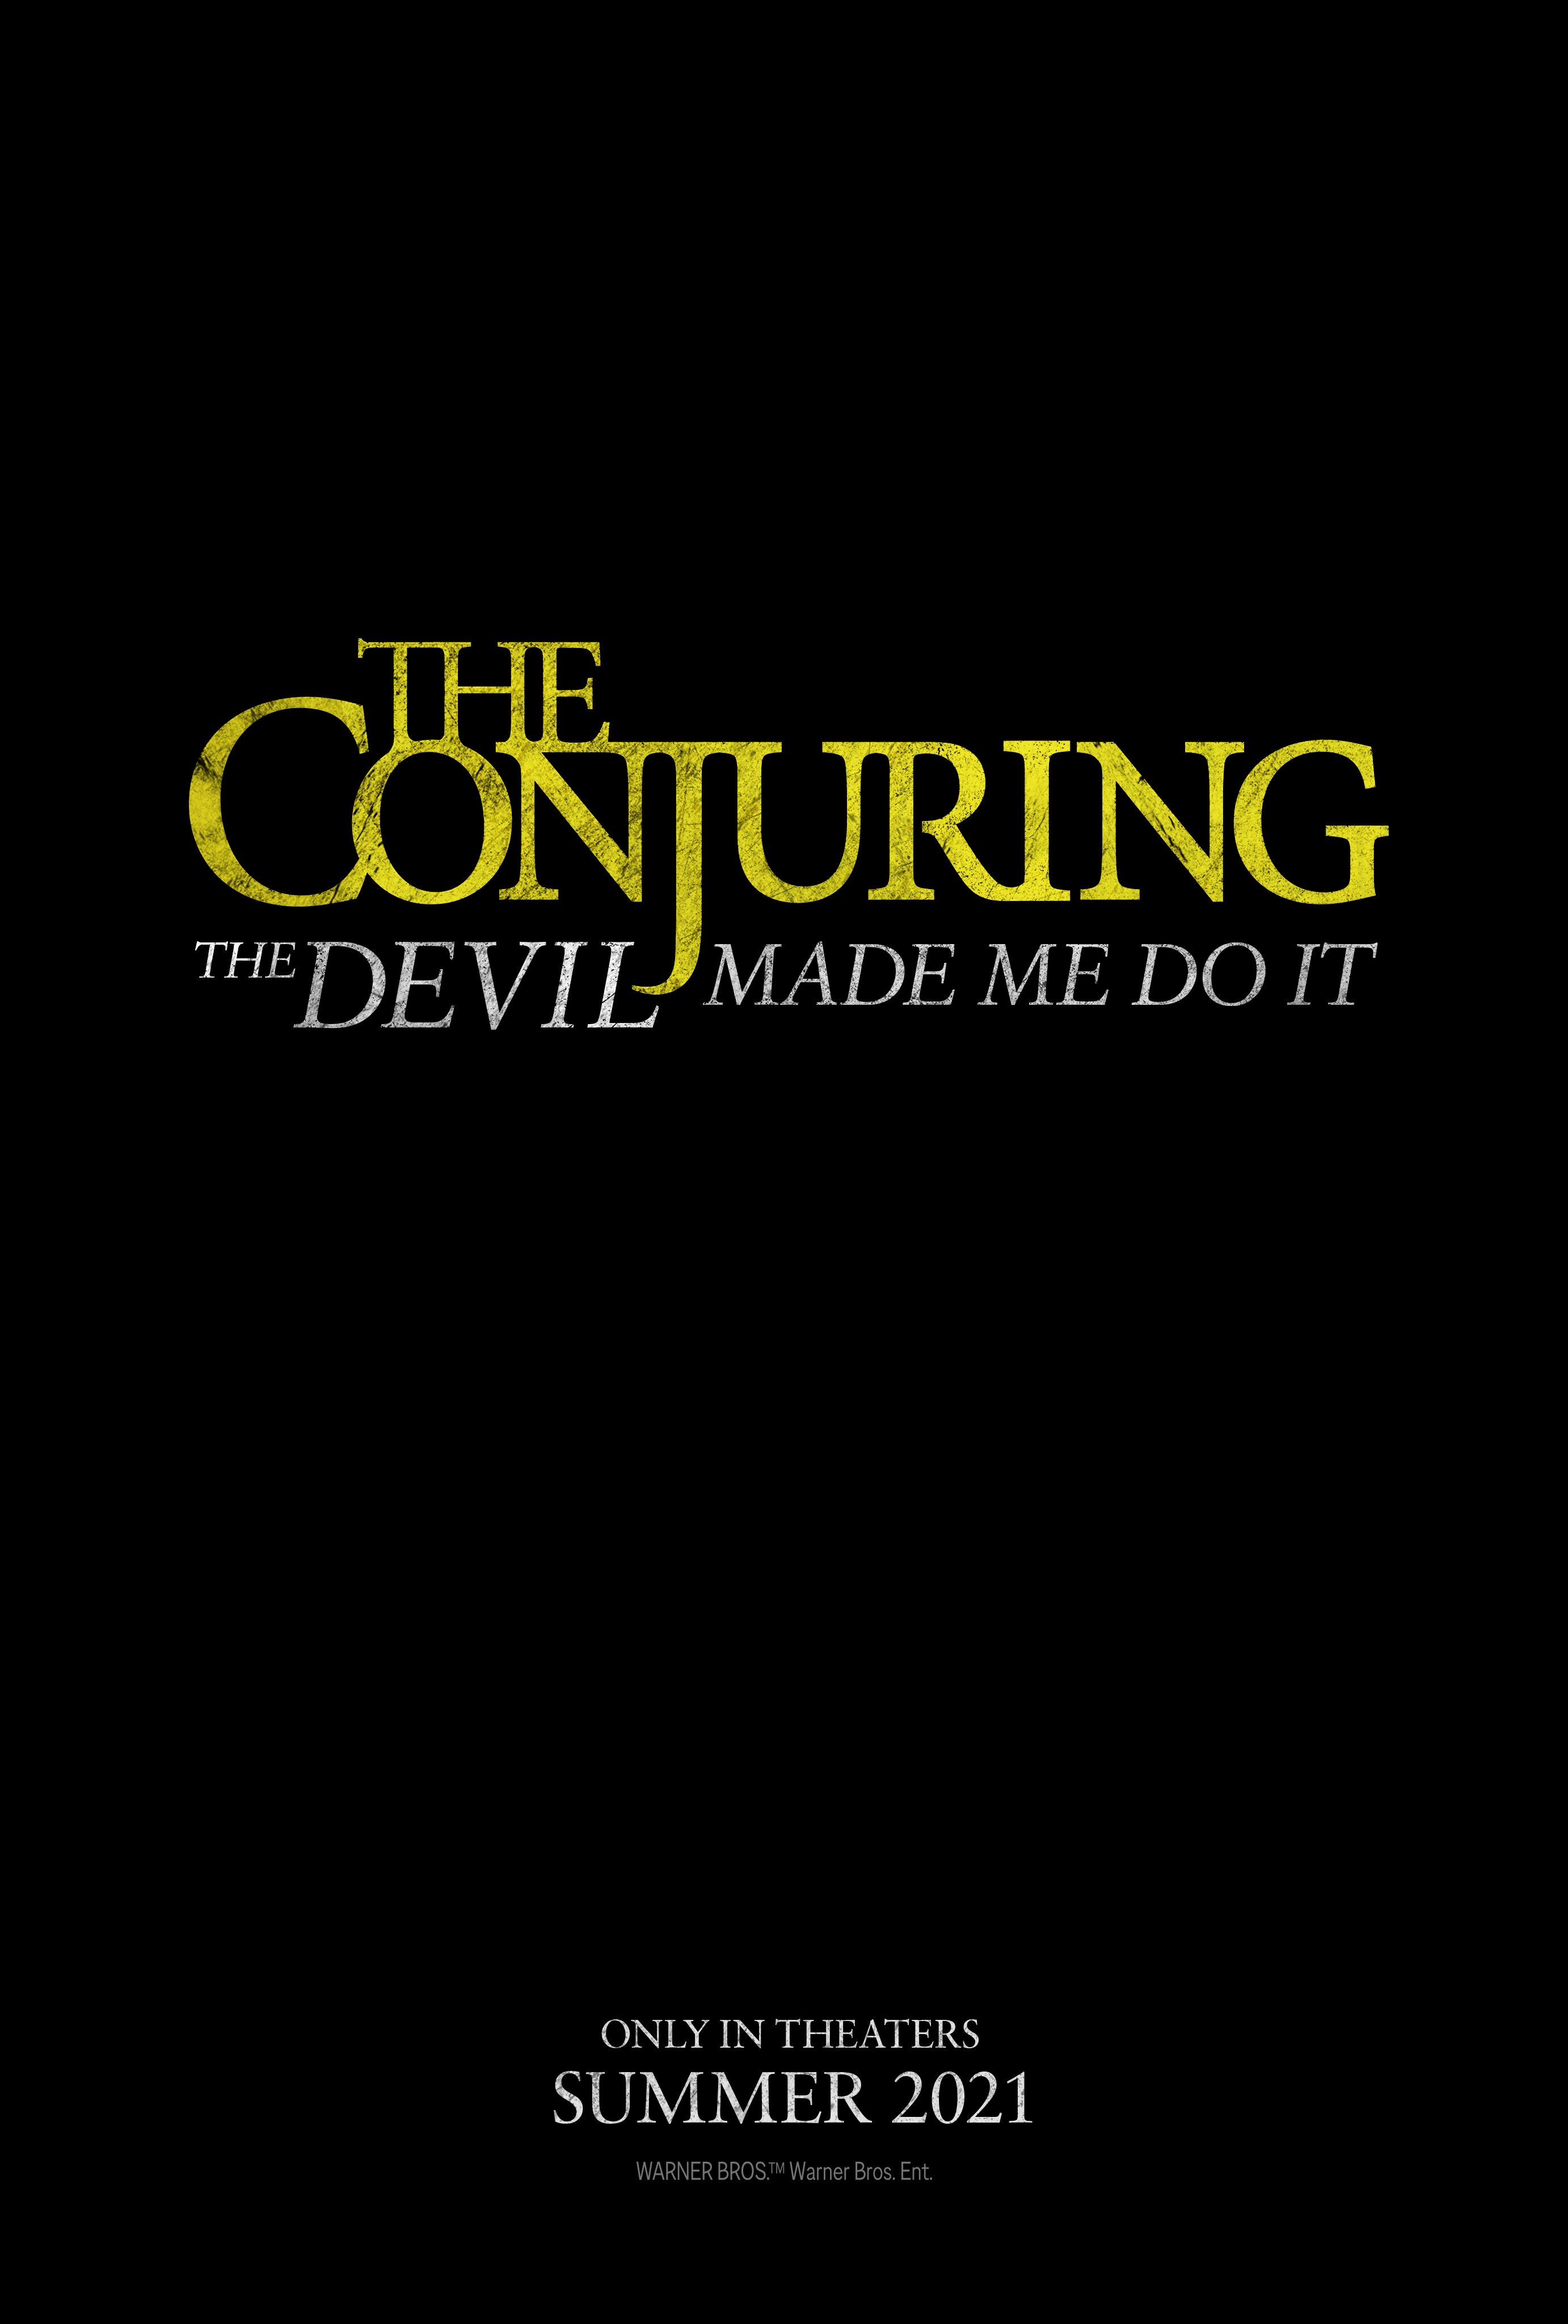 Nonton film The Conjuring: The Devil Made Me Do It layarkaca21 indoxx1 ganool online streaming terbaru